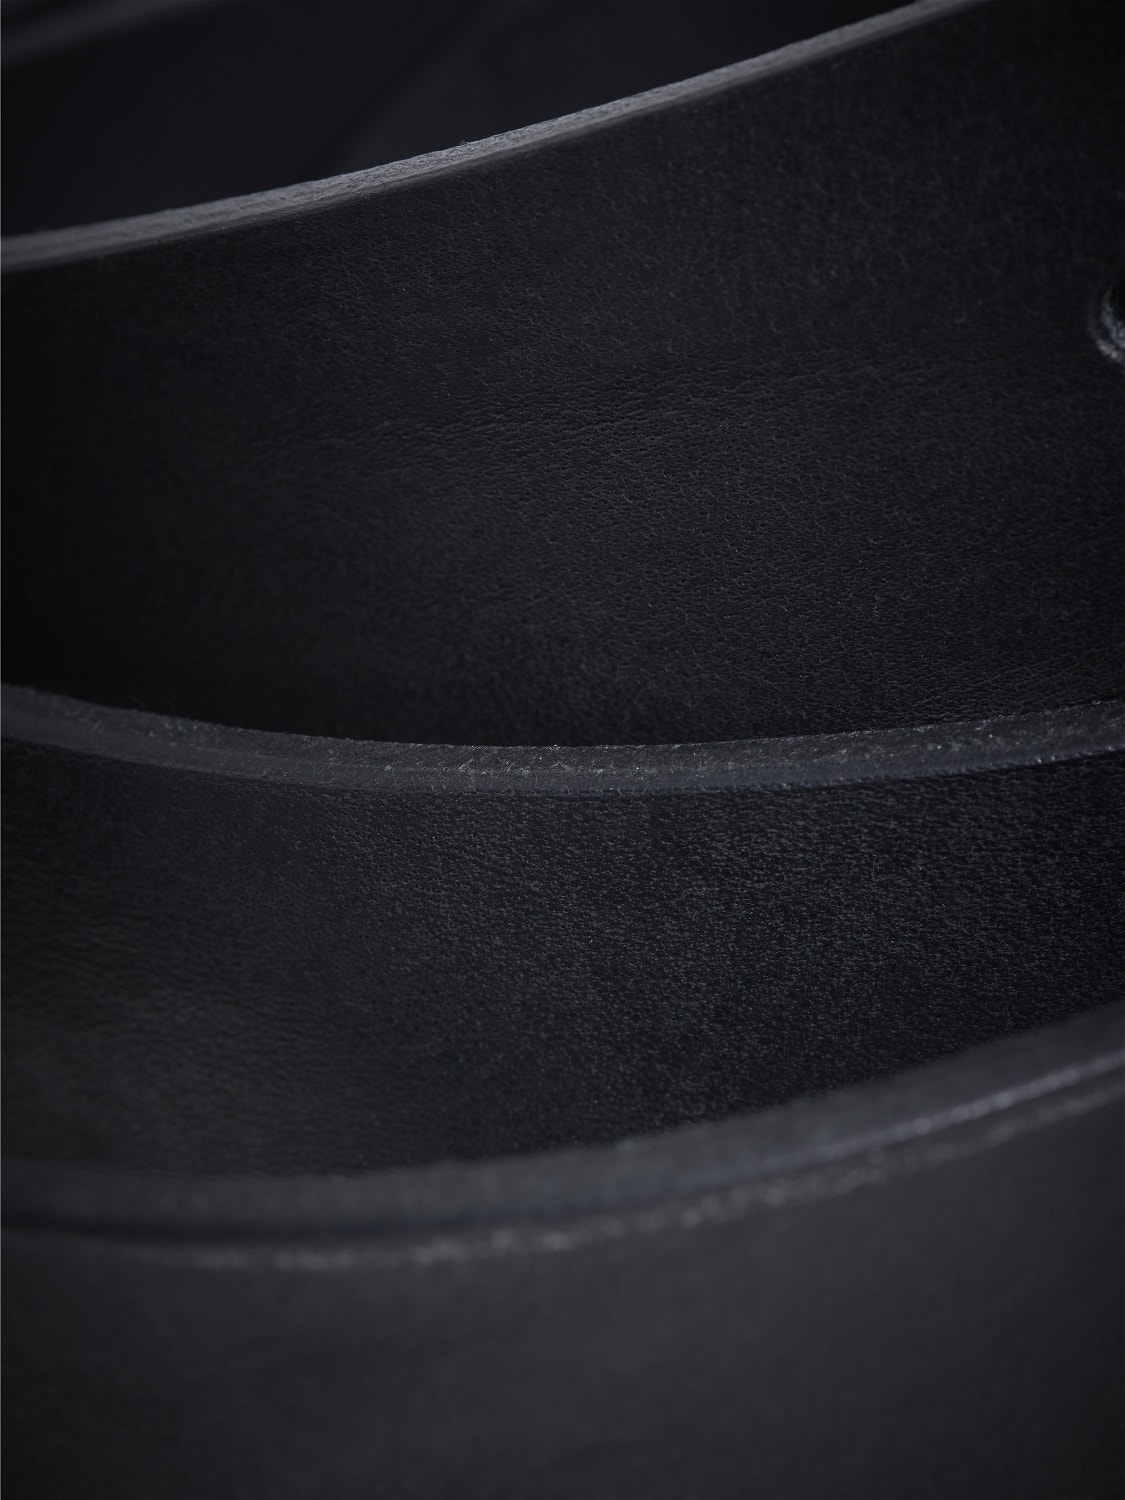 Jack & Jones Leather Belt -Black - 12152757